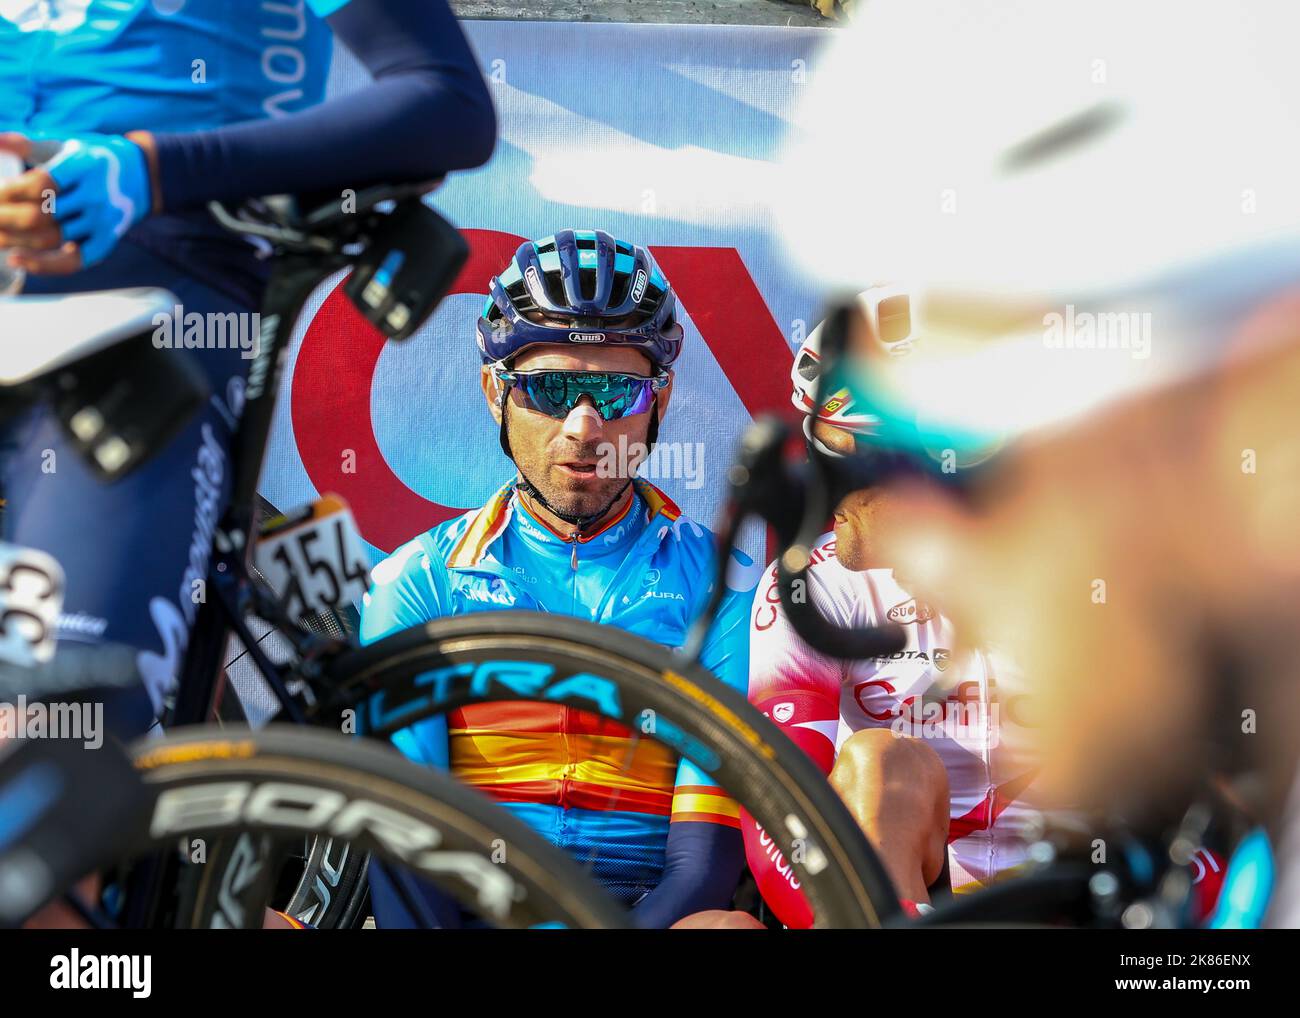 Alejandro Valverde of team Movistar during the Il Lombardia 2019 race in Lombardia, Italy on Saturday October 12, 2019. Stock Photo